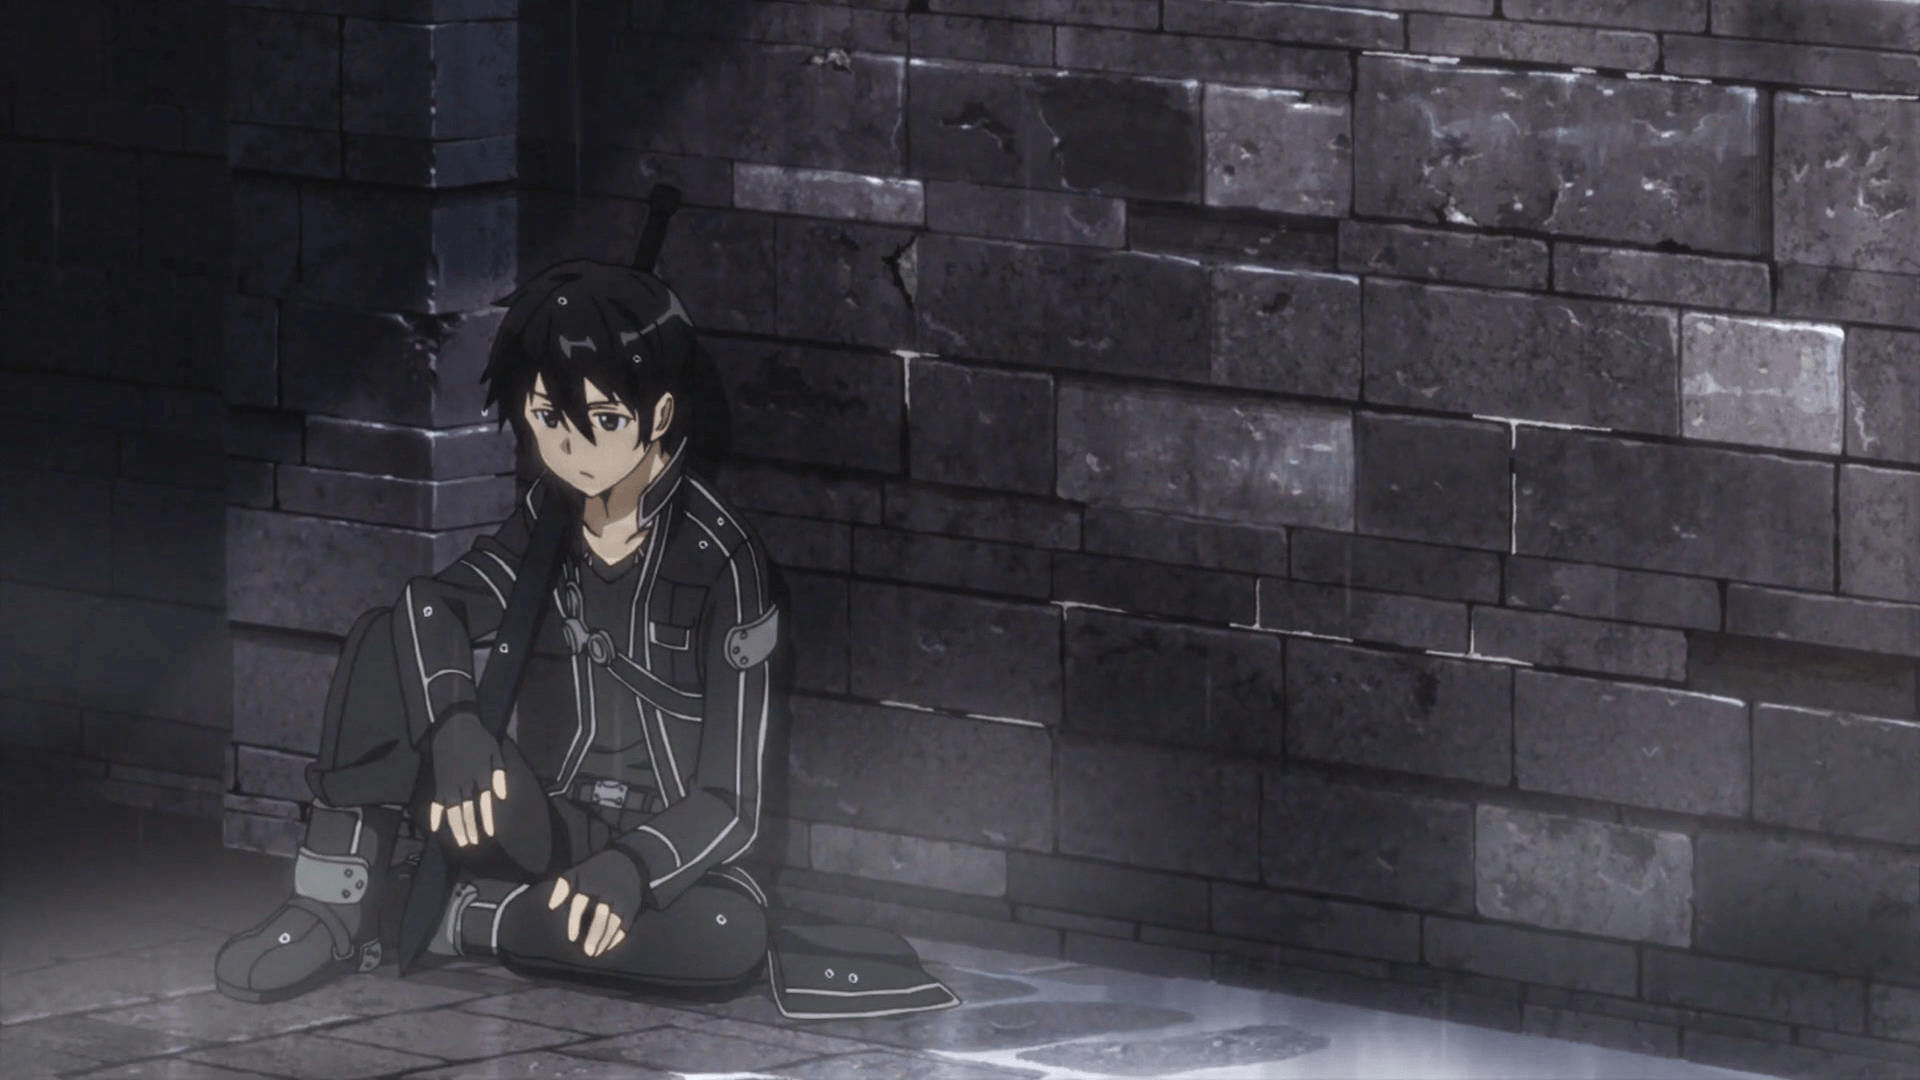 Sad Boy Anime Wallpaper